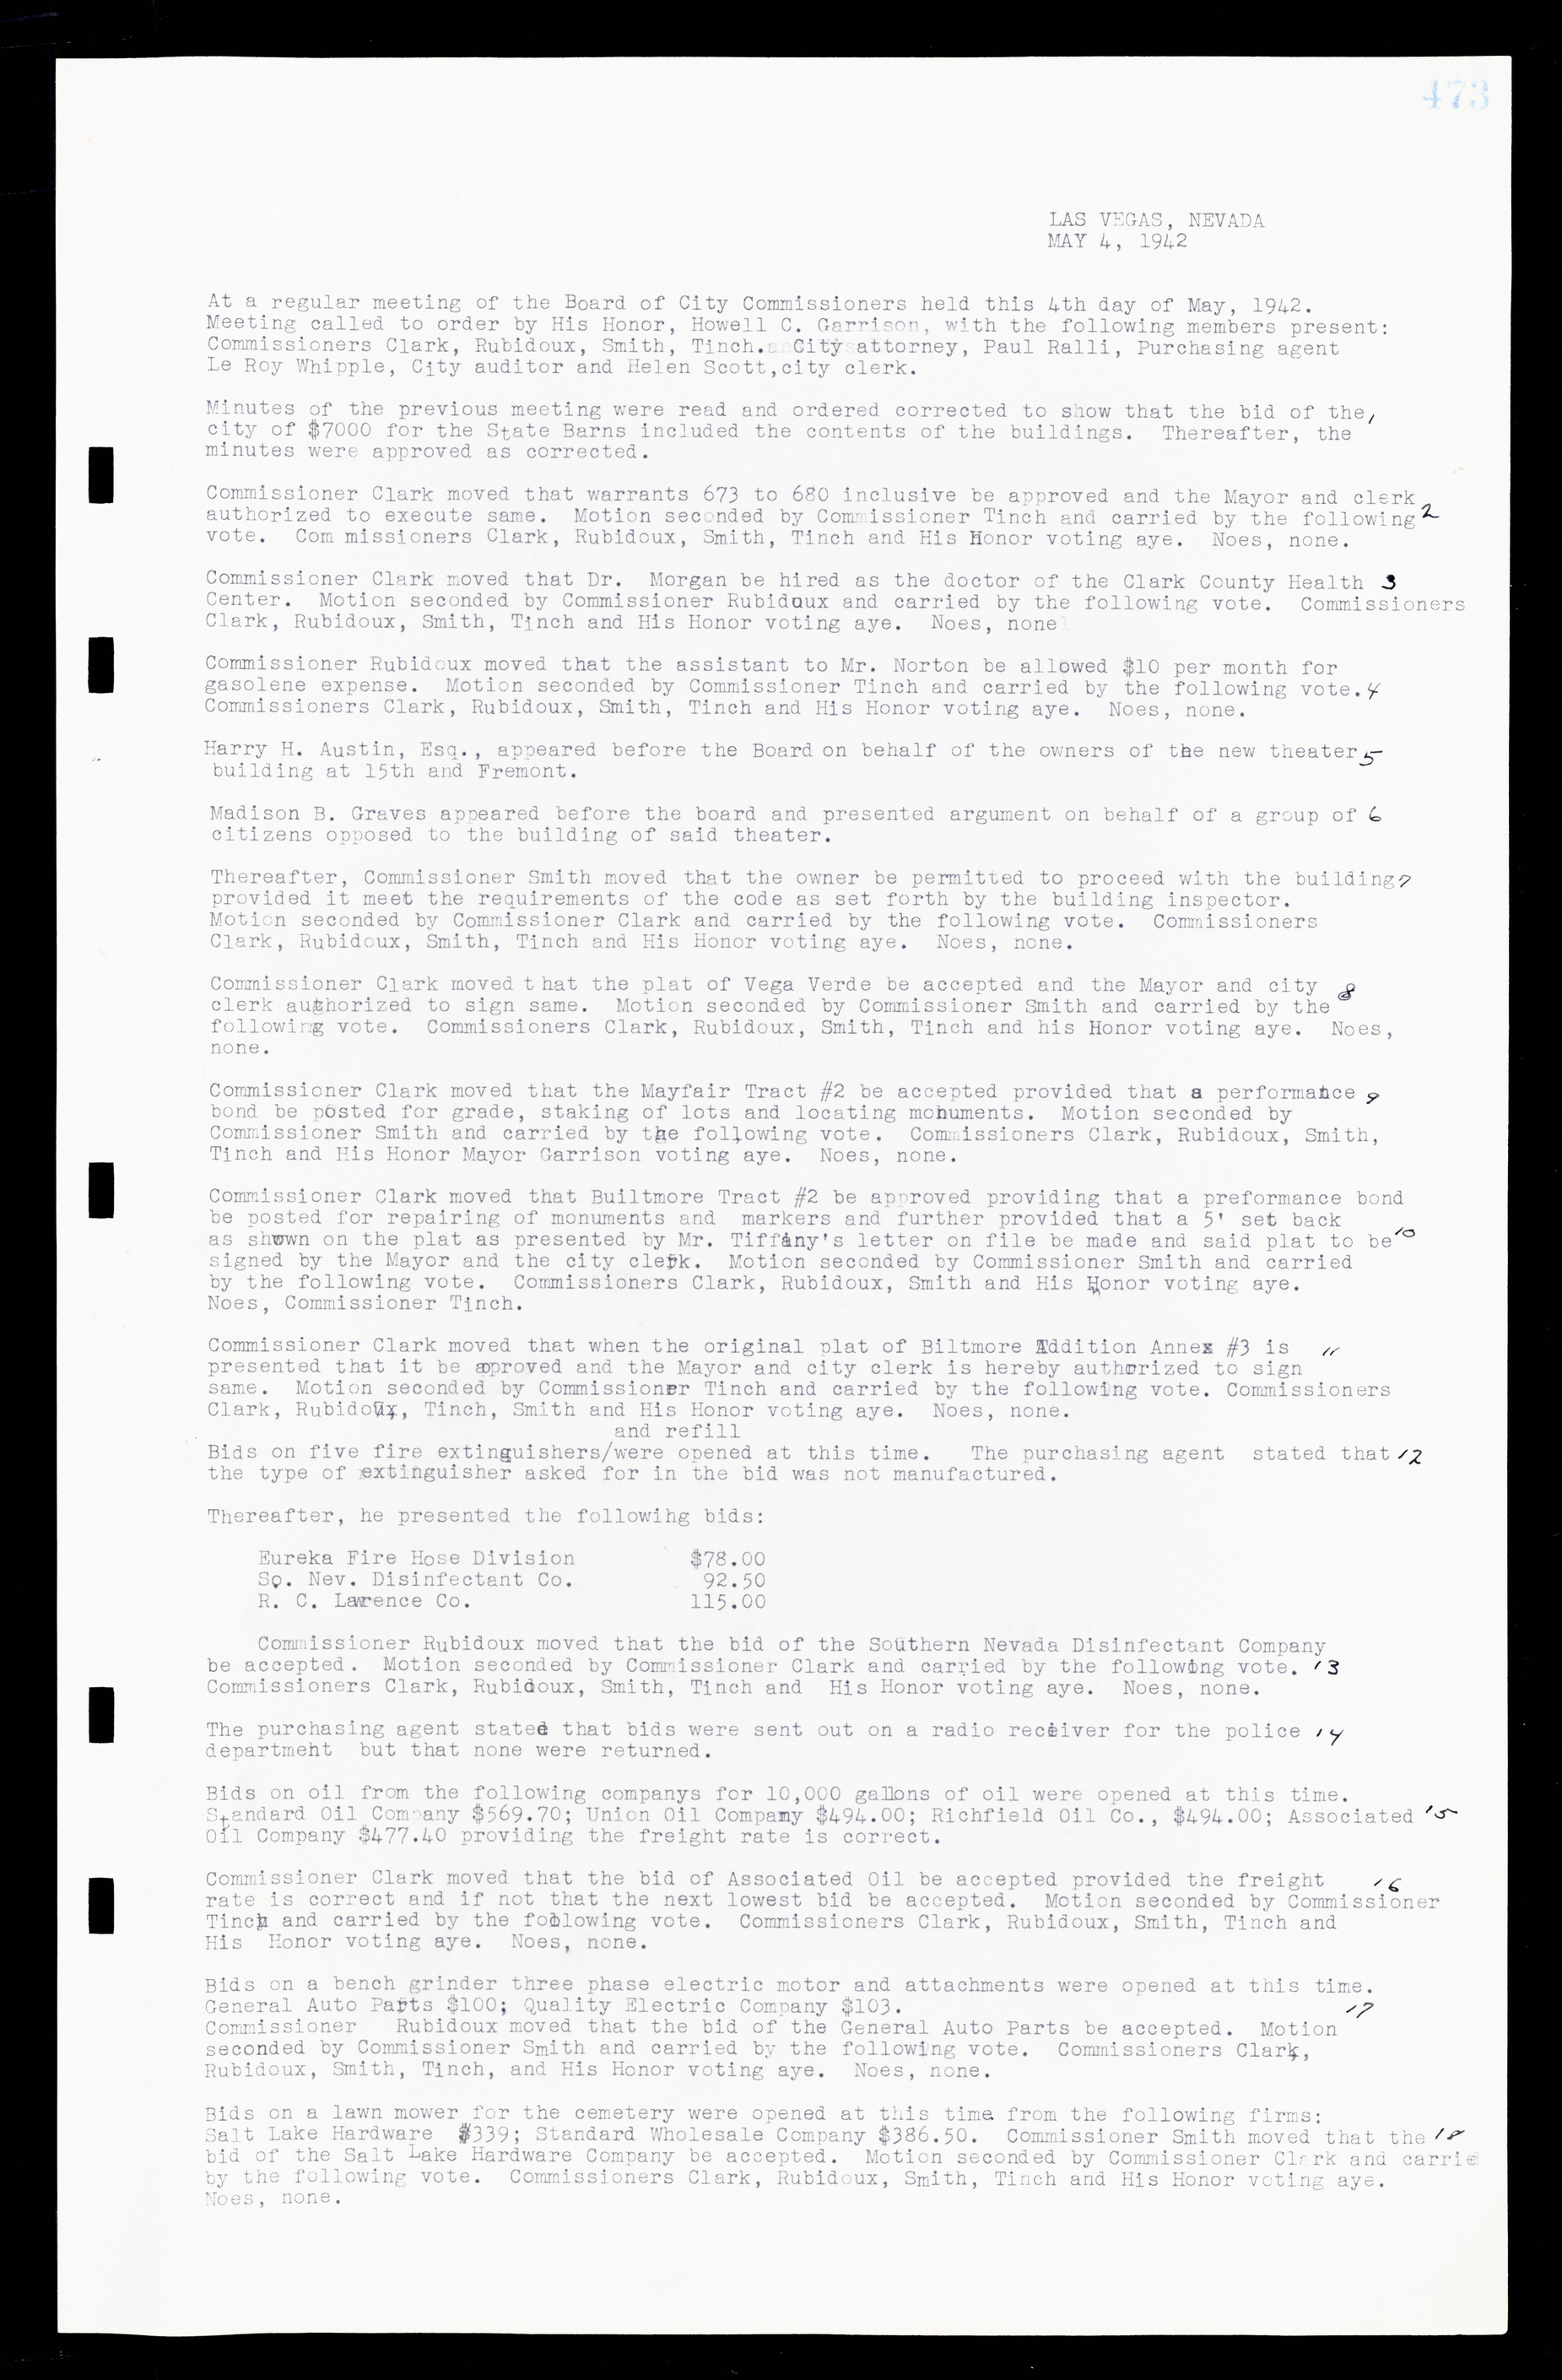 Las Vegas City Commission Minutes, February 17, 1937 to August 4, 1942, lvc000004-501